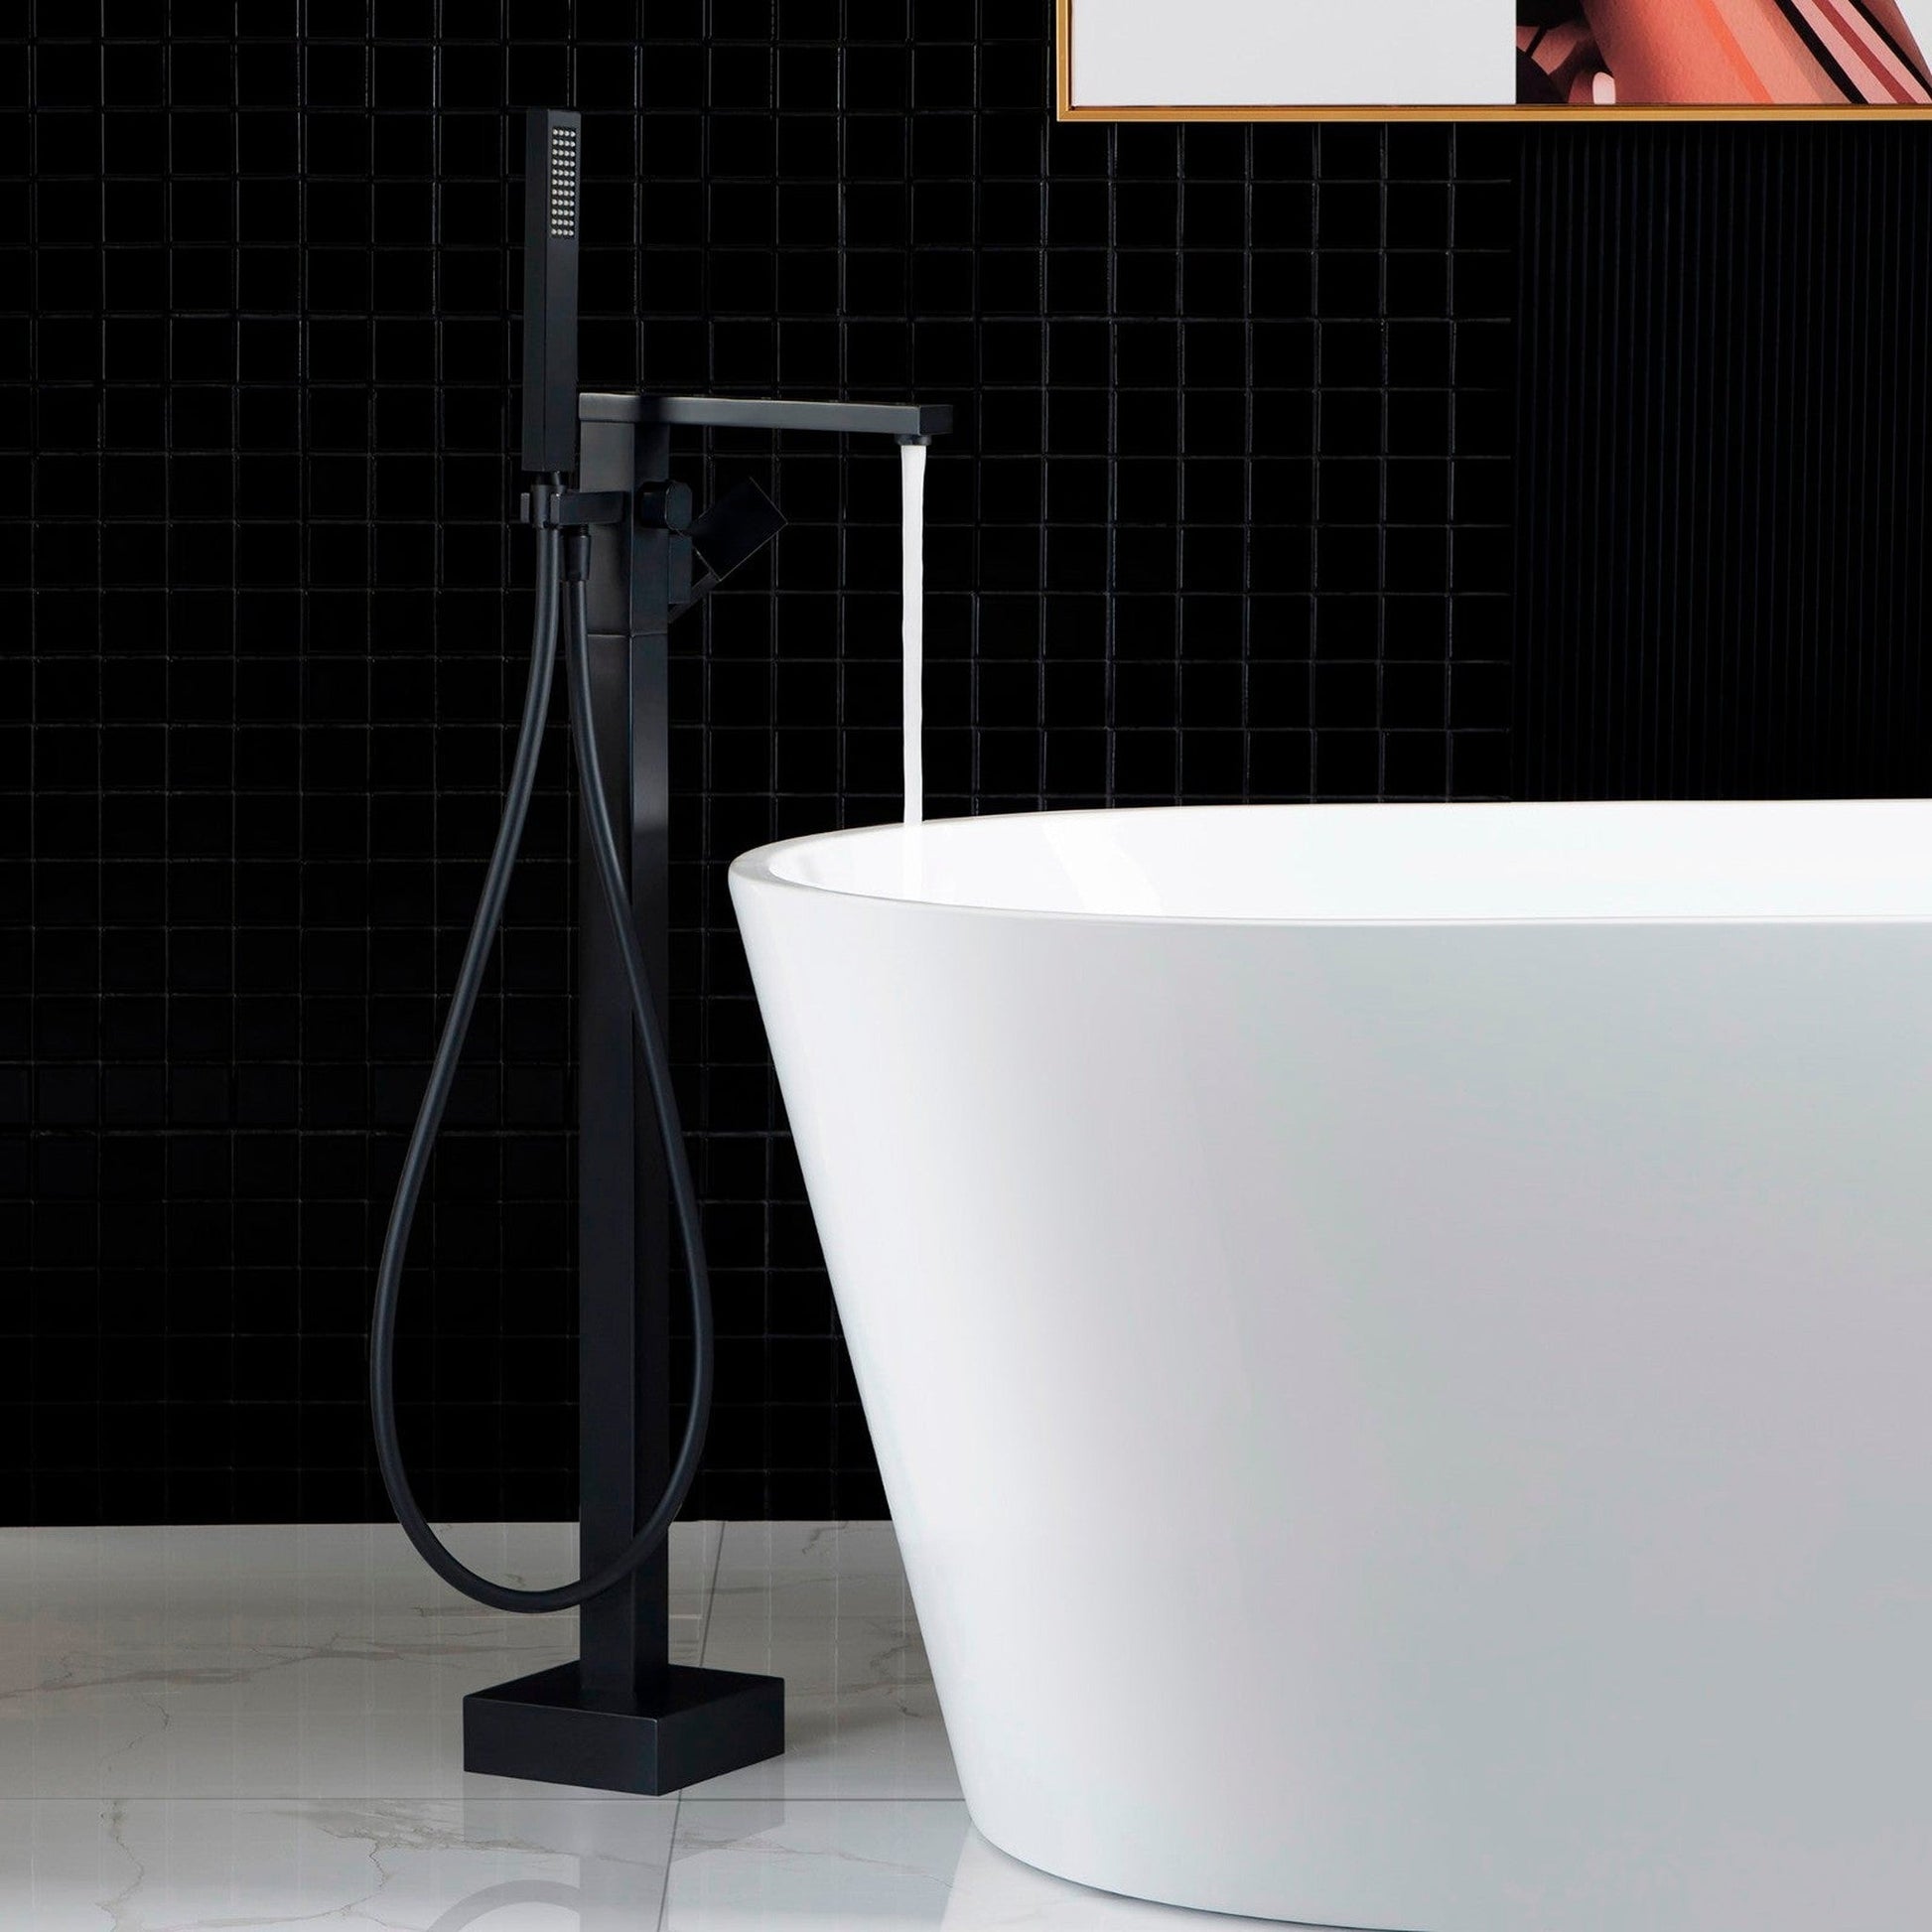 WoodBridge F0009 Matte Black Contemporary Single Handle Floor Mount Freestanding Tub Filler Faucet With Hand Shower